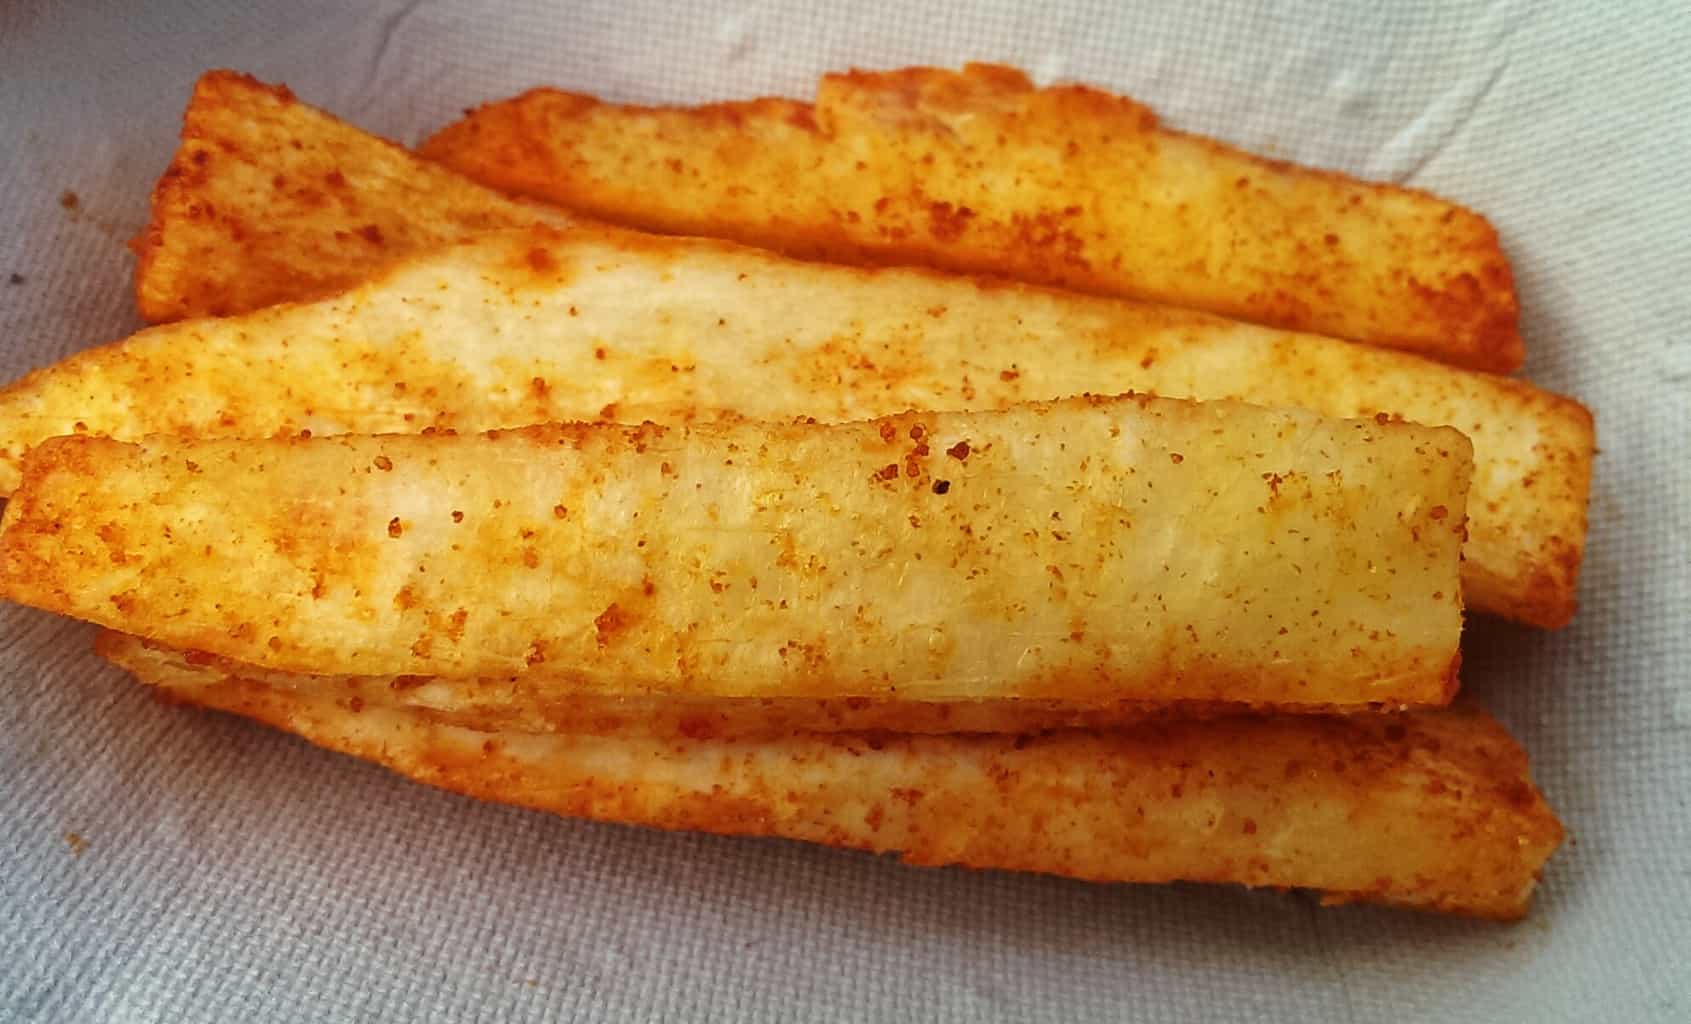 mogo (cassava fries)